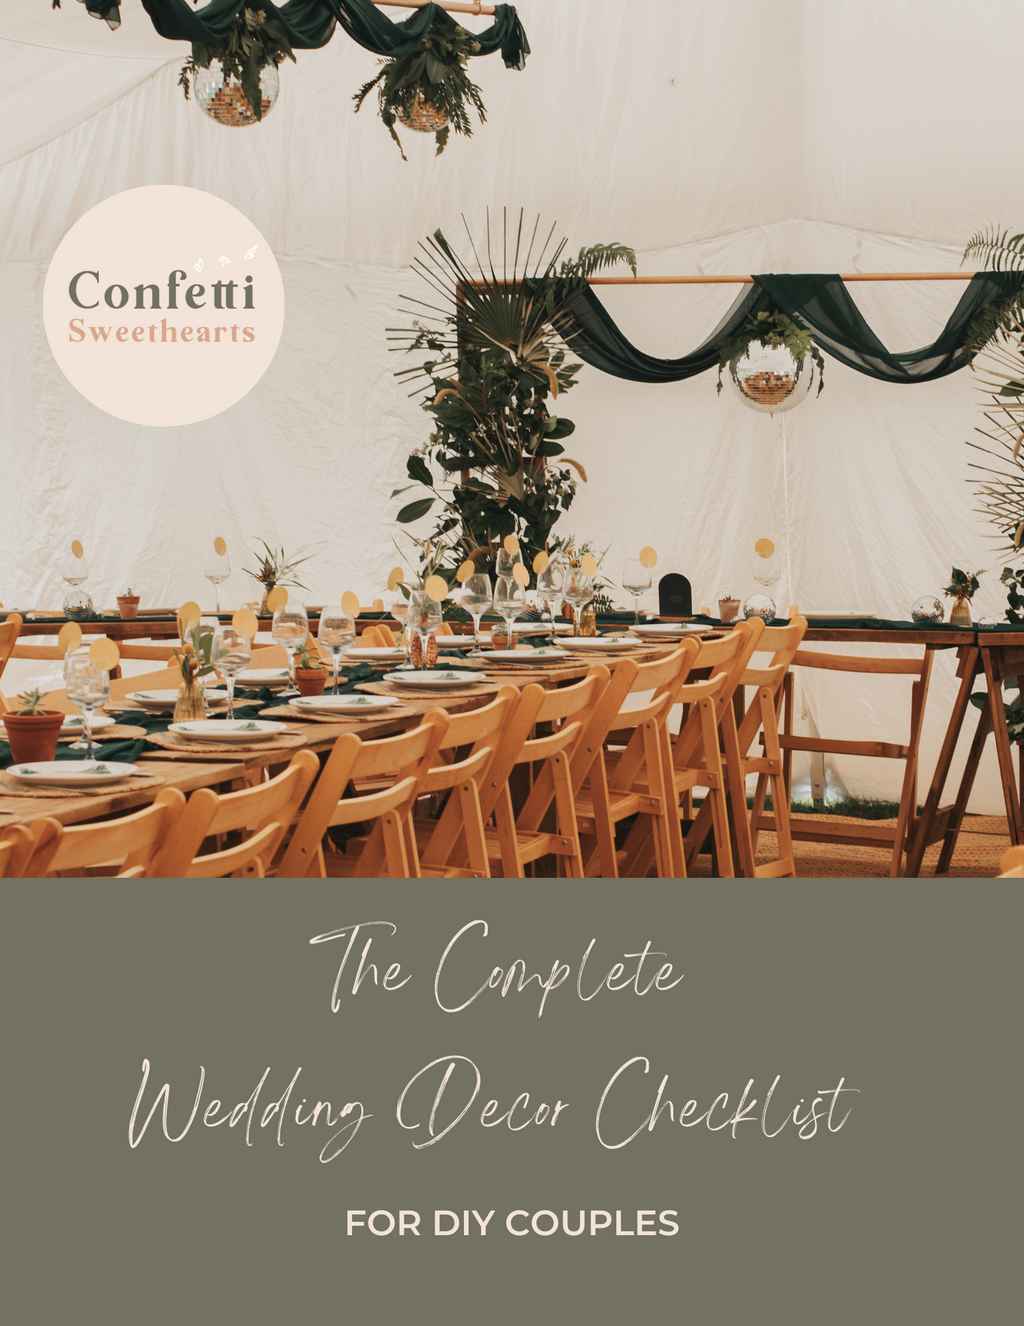 the complete wedding decor checklist